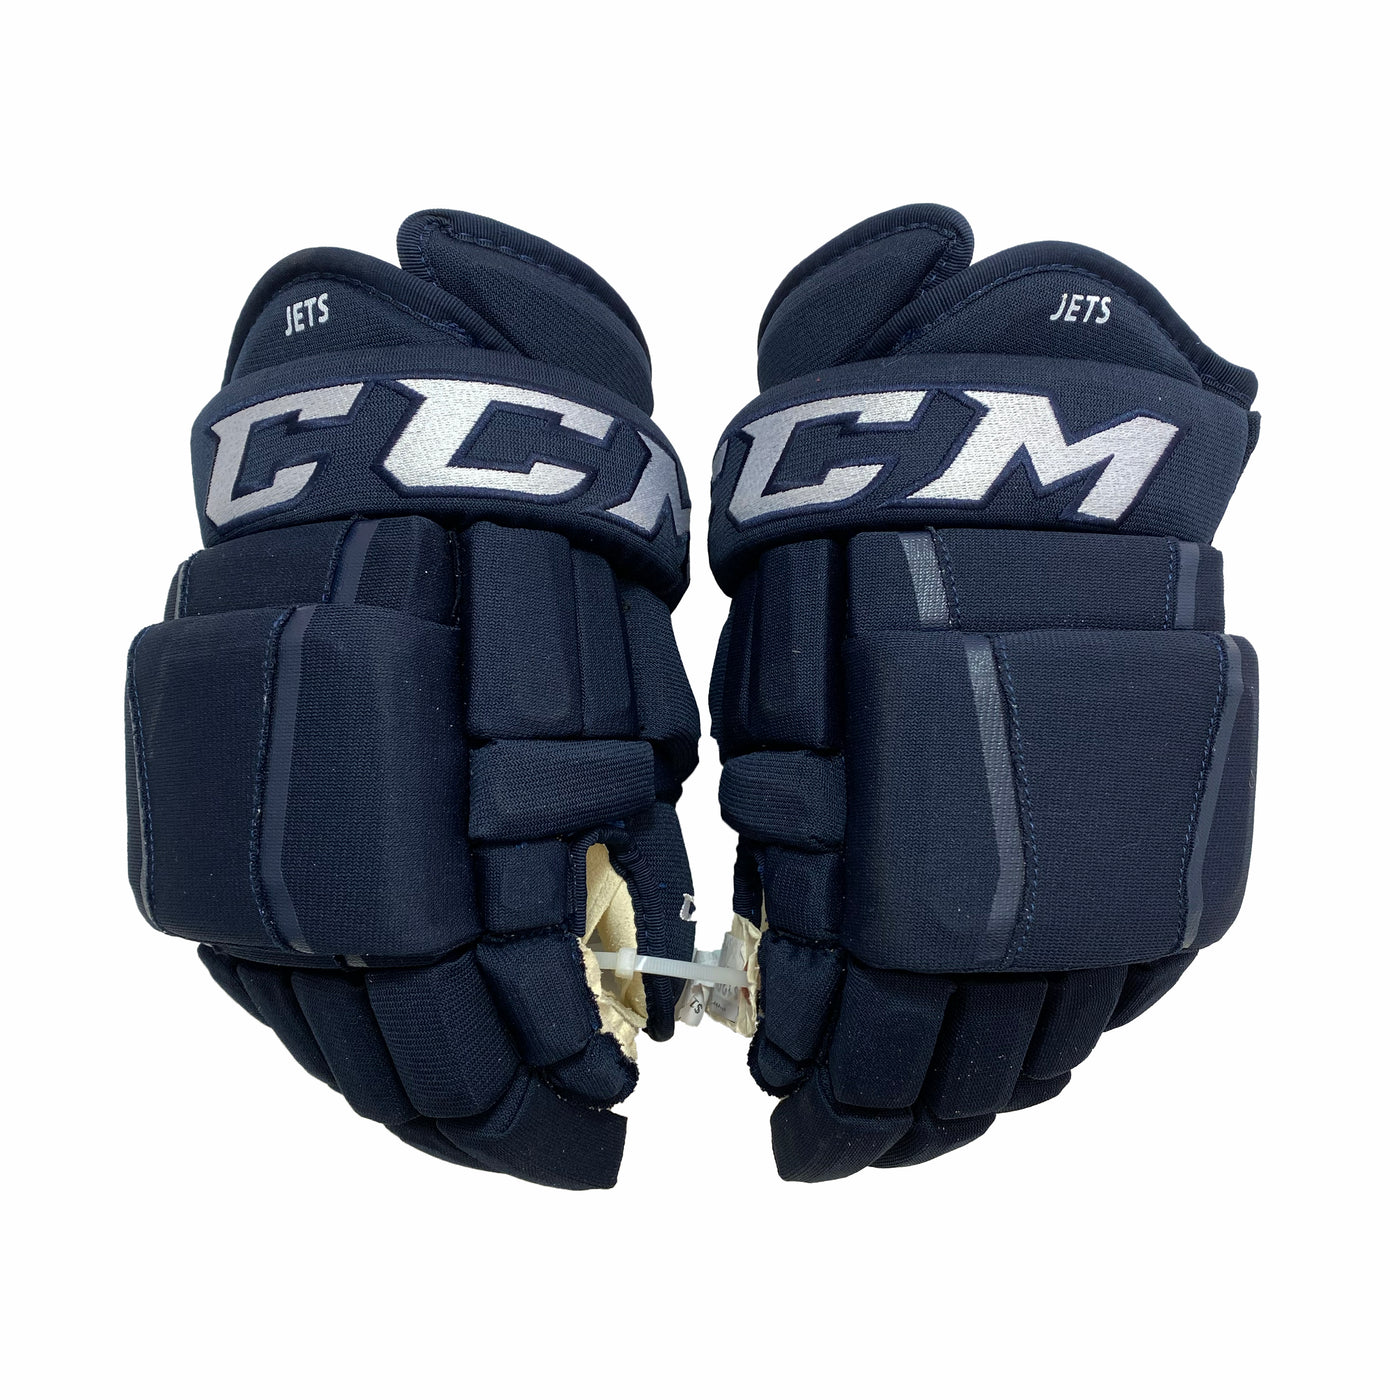 CCM HG97 - Winnipeg Jets - Team Issue - Pro Stock Hockey Gloves w/shot blocker